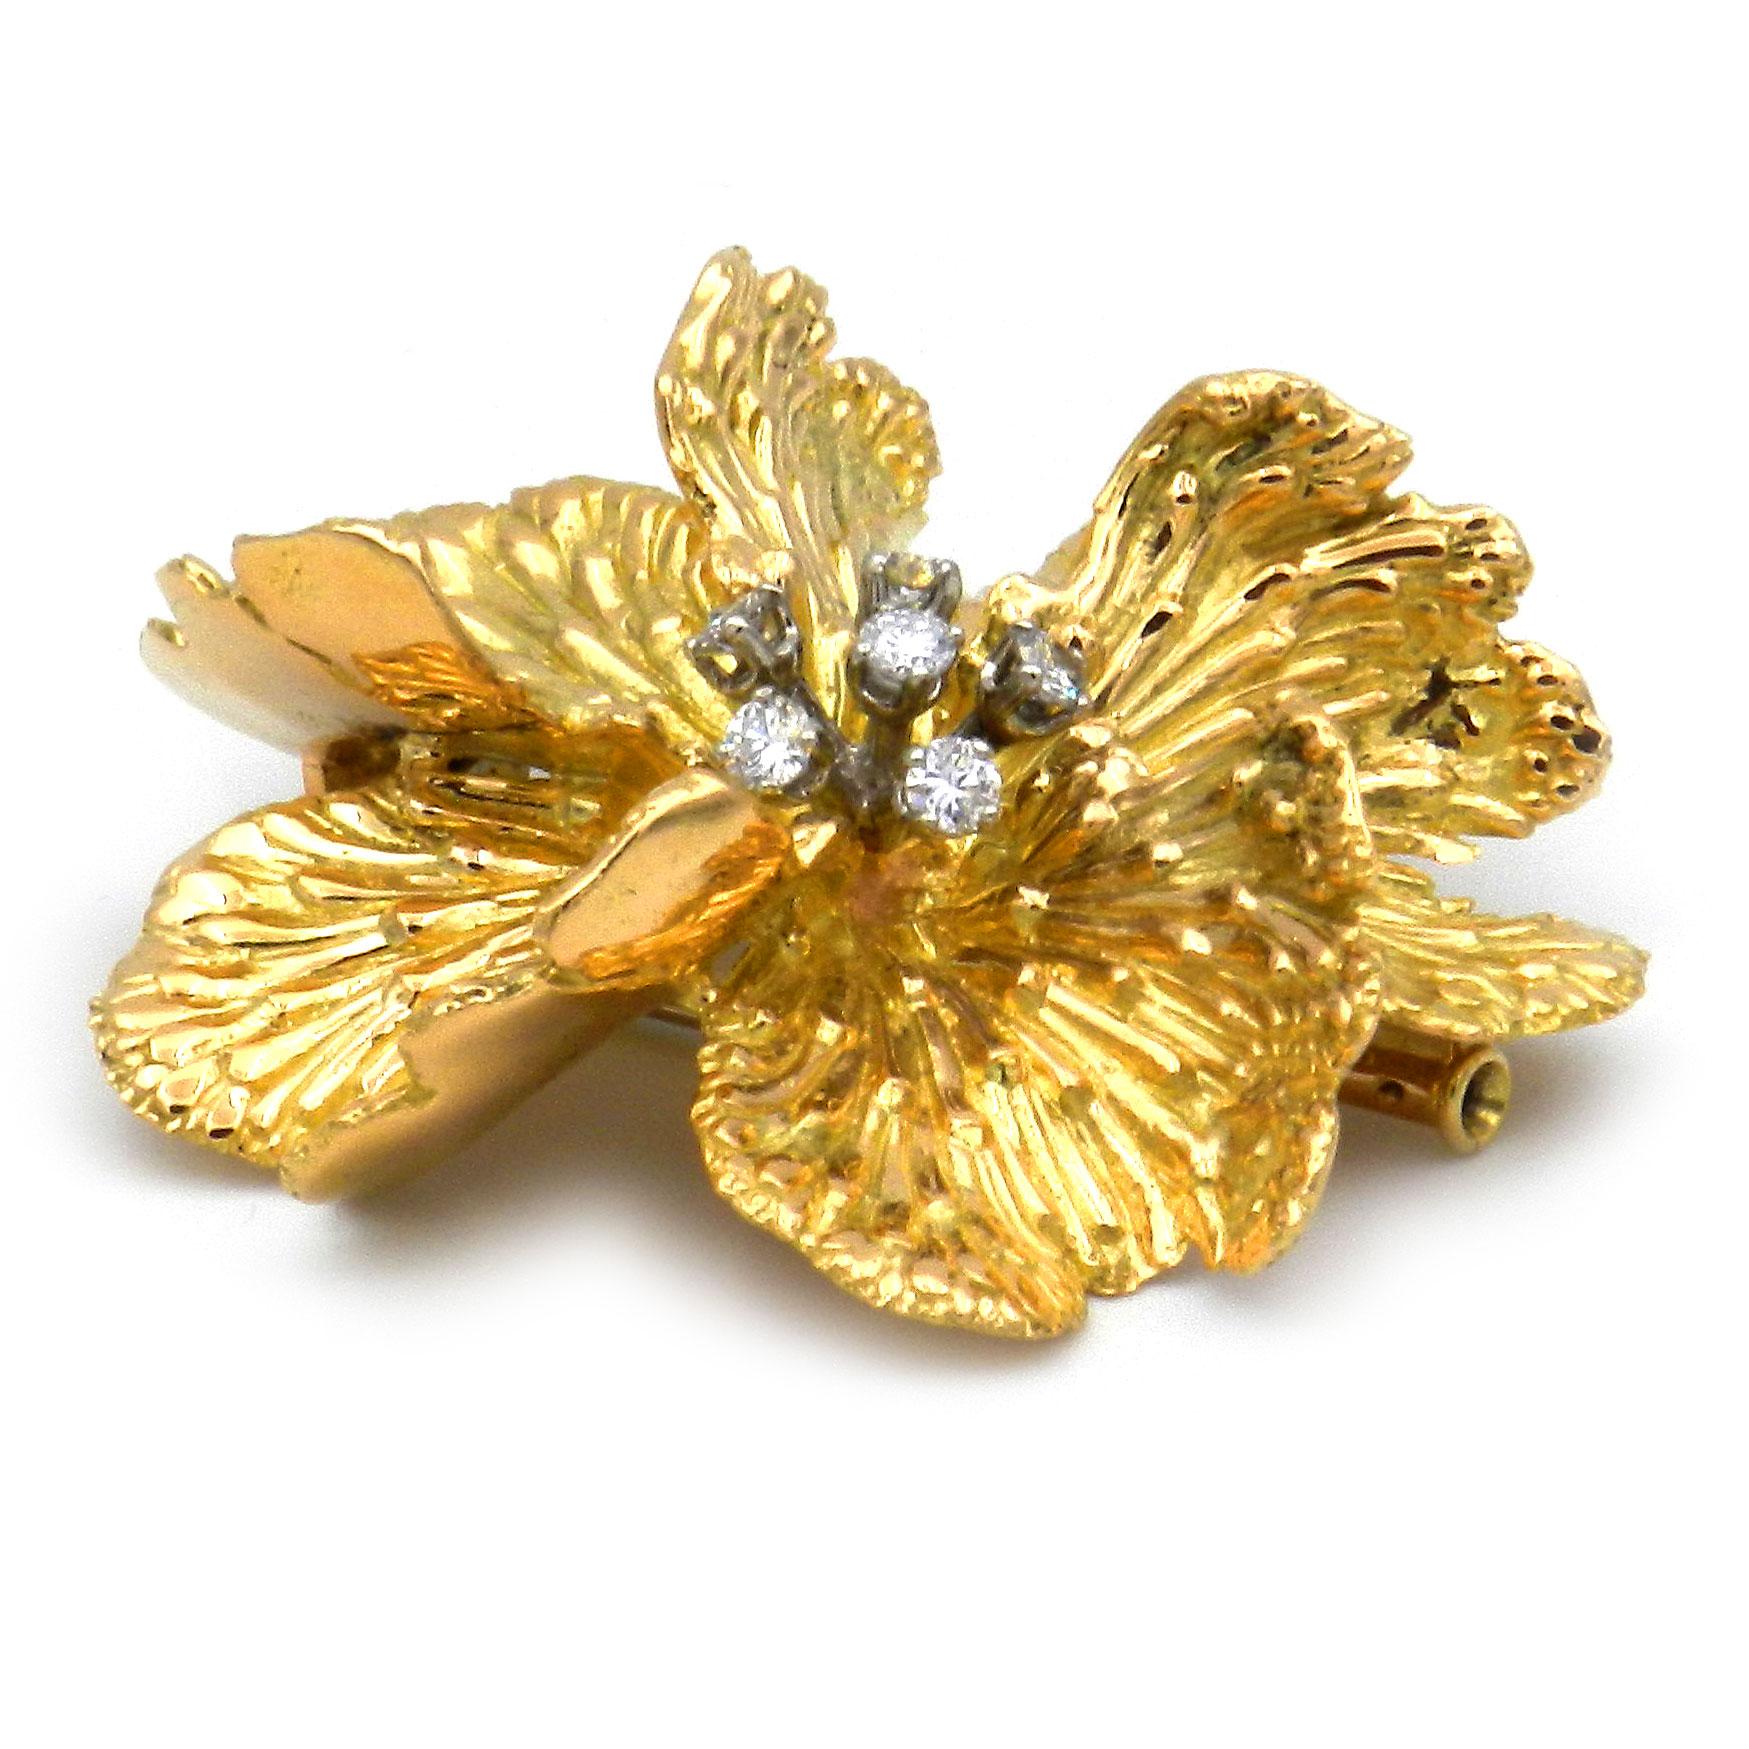 Taille brillant Boucheron Broche fleur en or 18 carats avec diamants 0,5 carat en vente